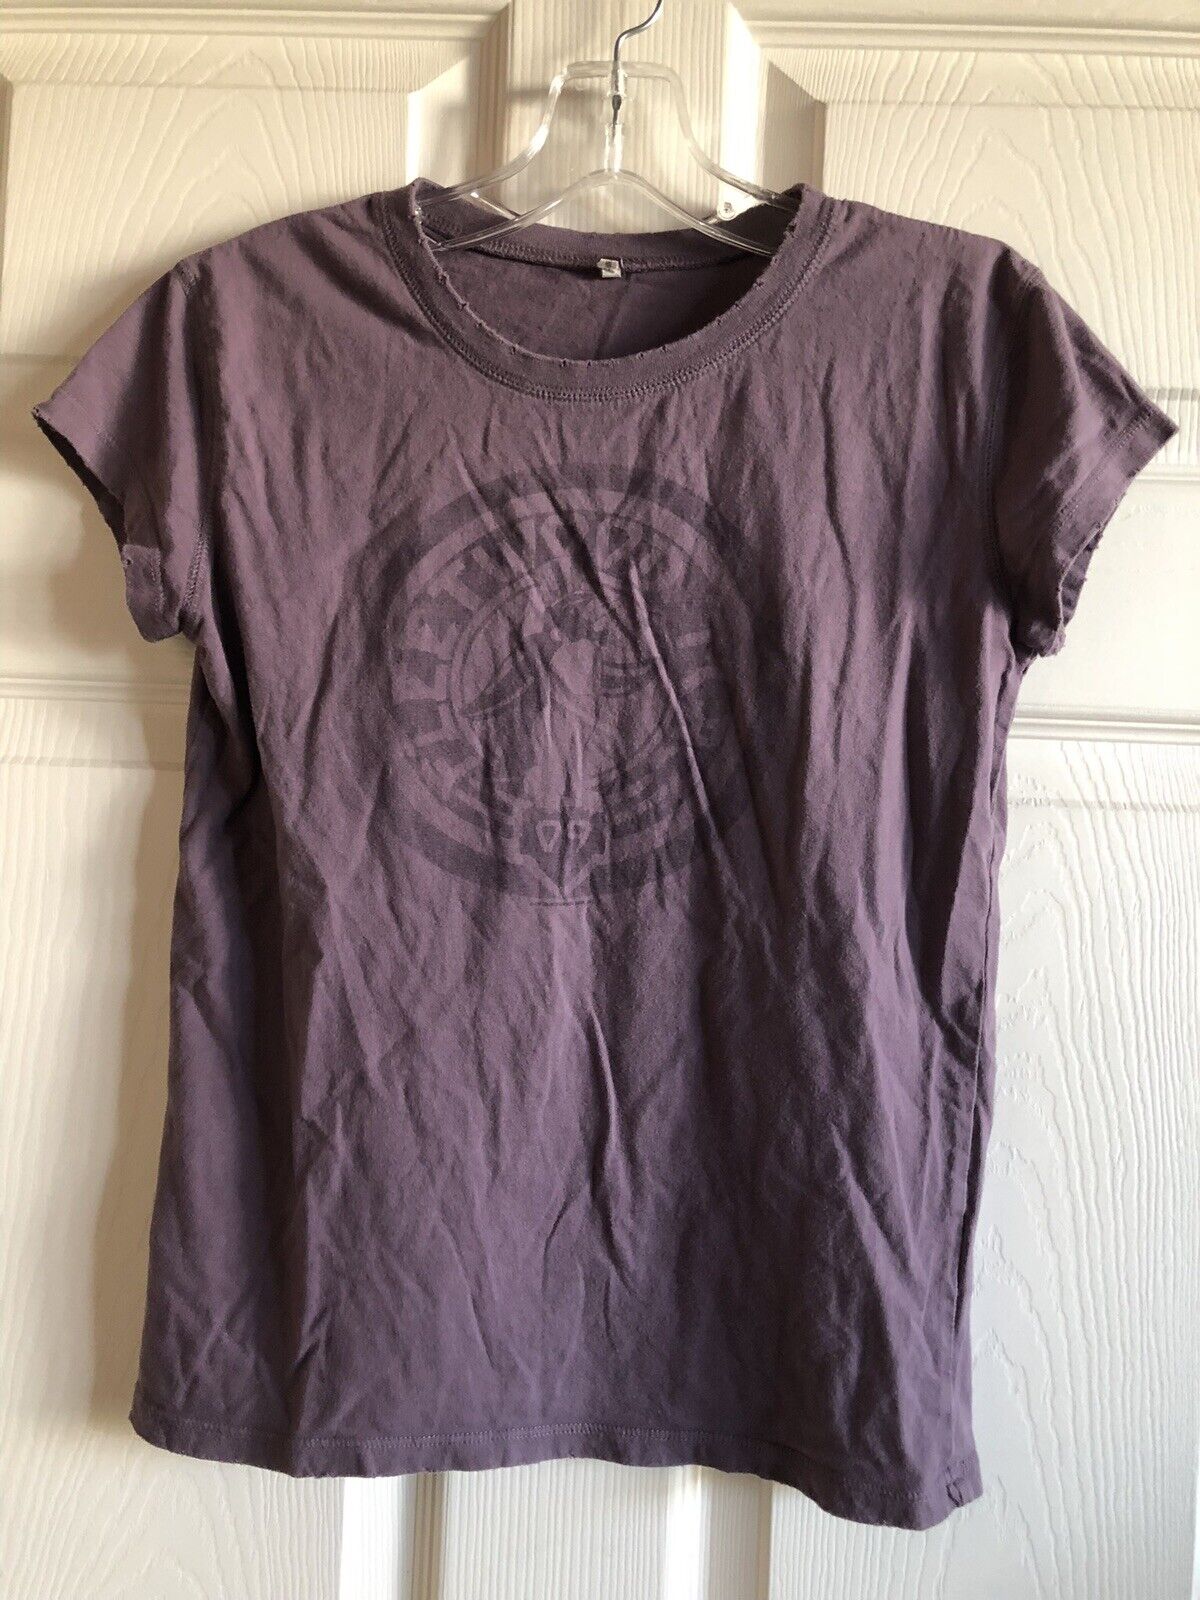 Fleetwood Mac Concert Tour 2009 Purple Penguin T-shirt Cotton Women’s Medium